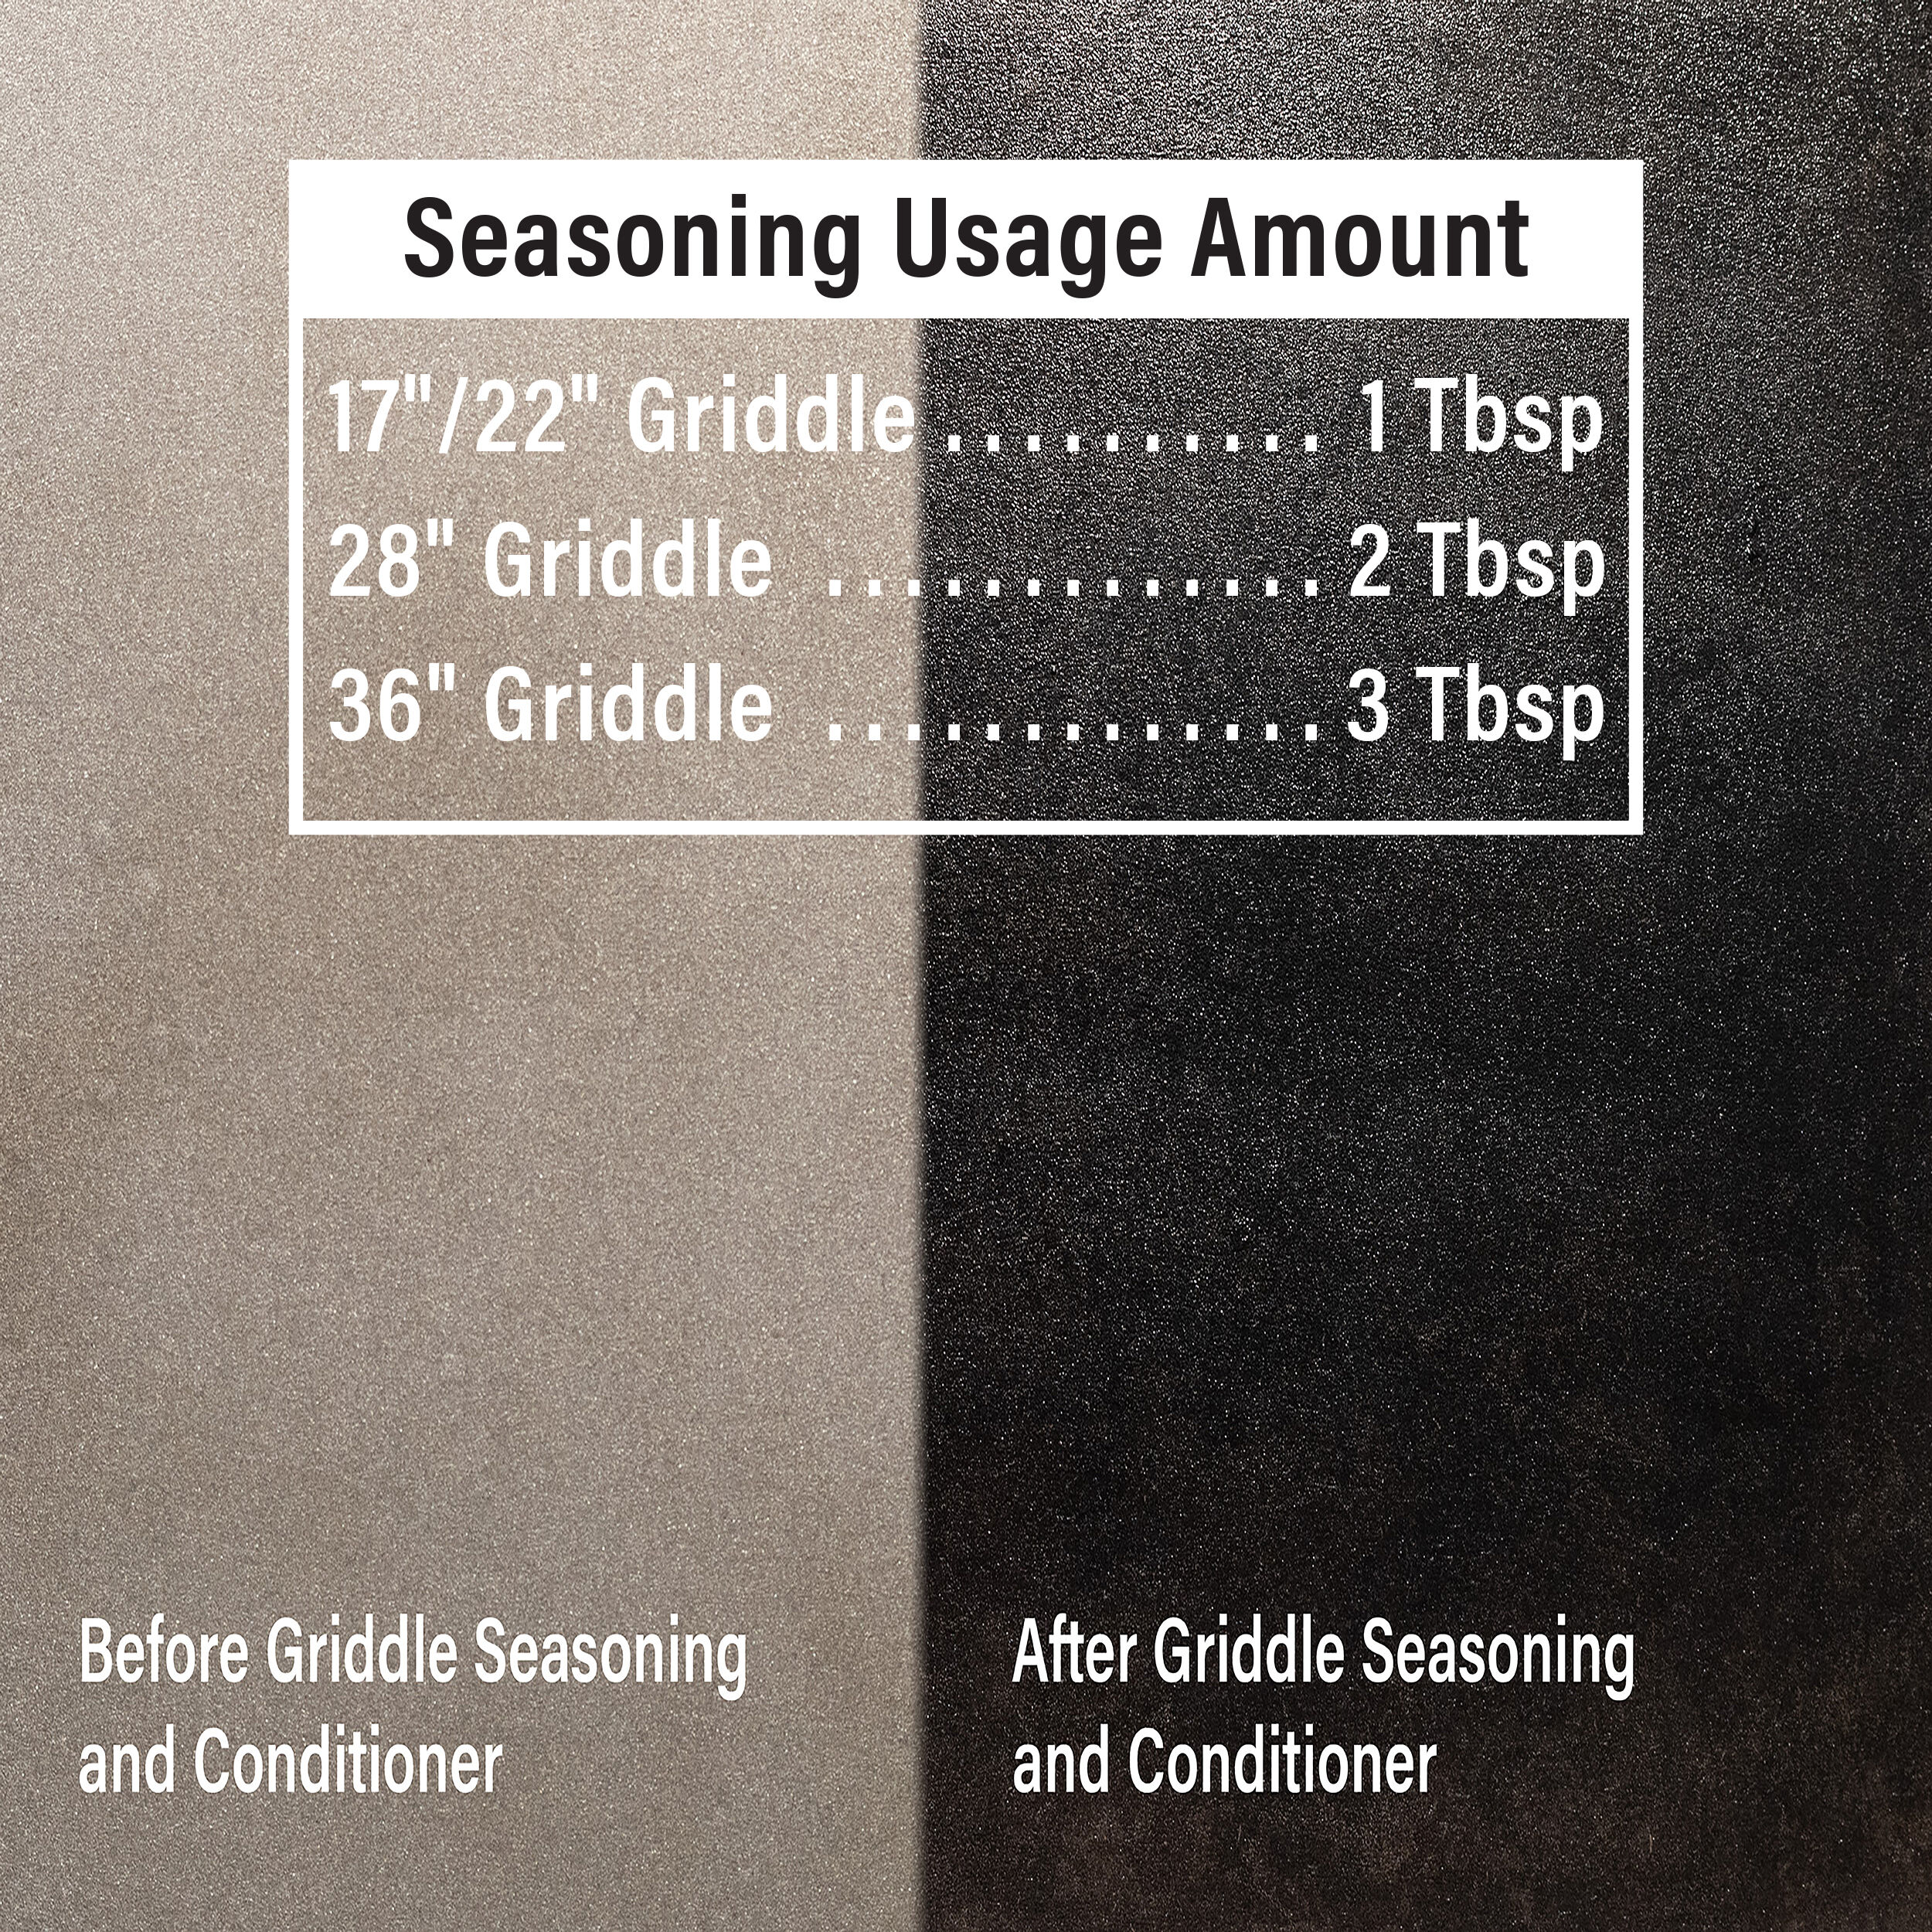 Griddle Seasoning & Cast Iron Conditioner, 6.5 oz.